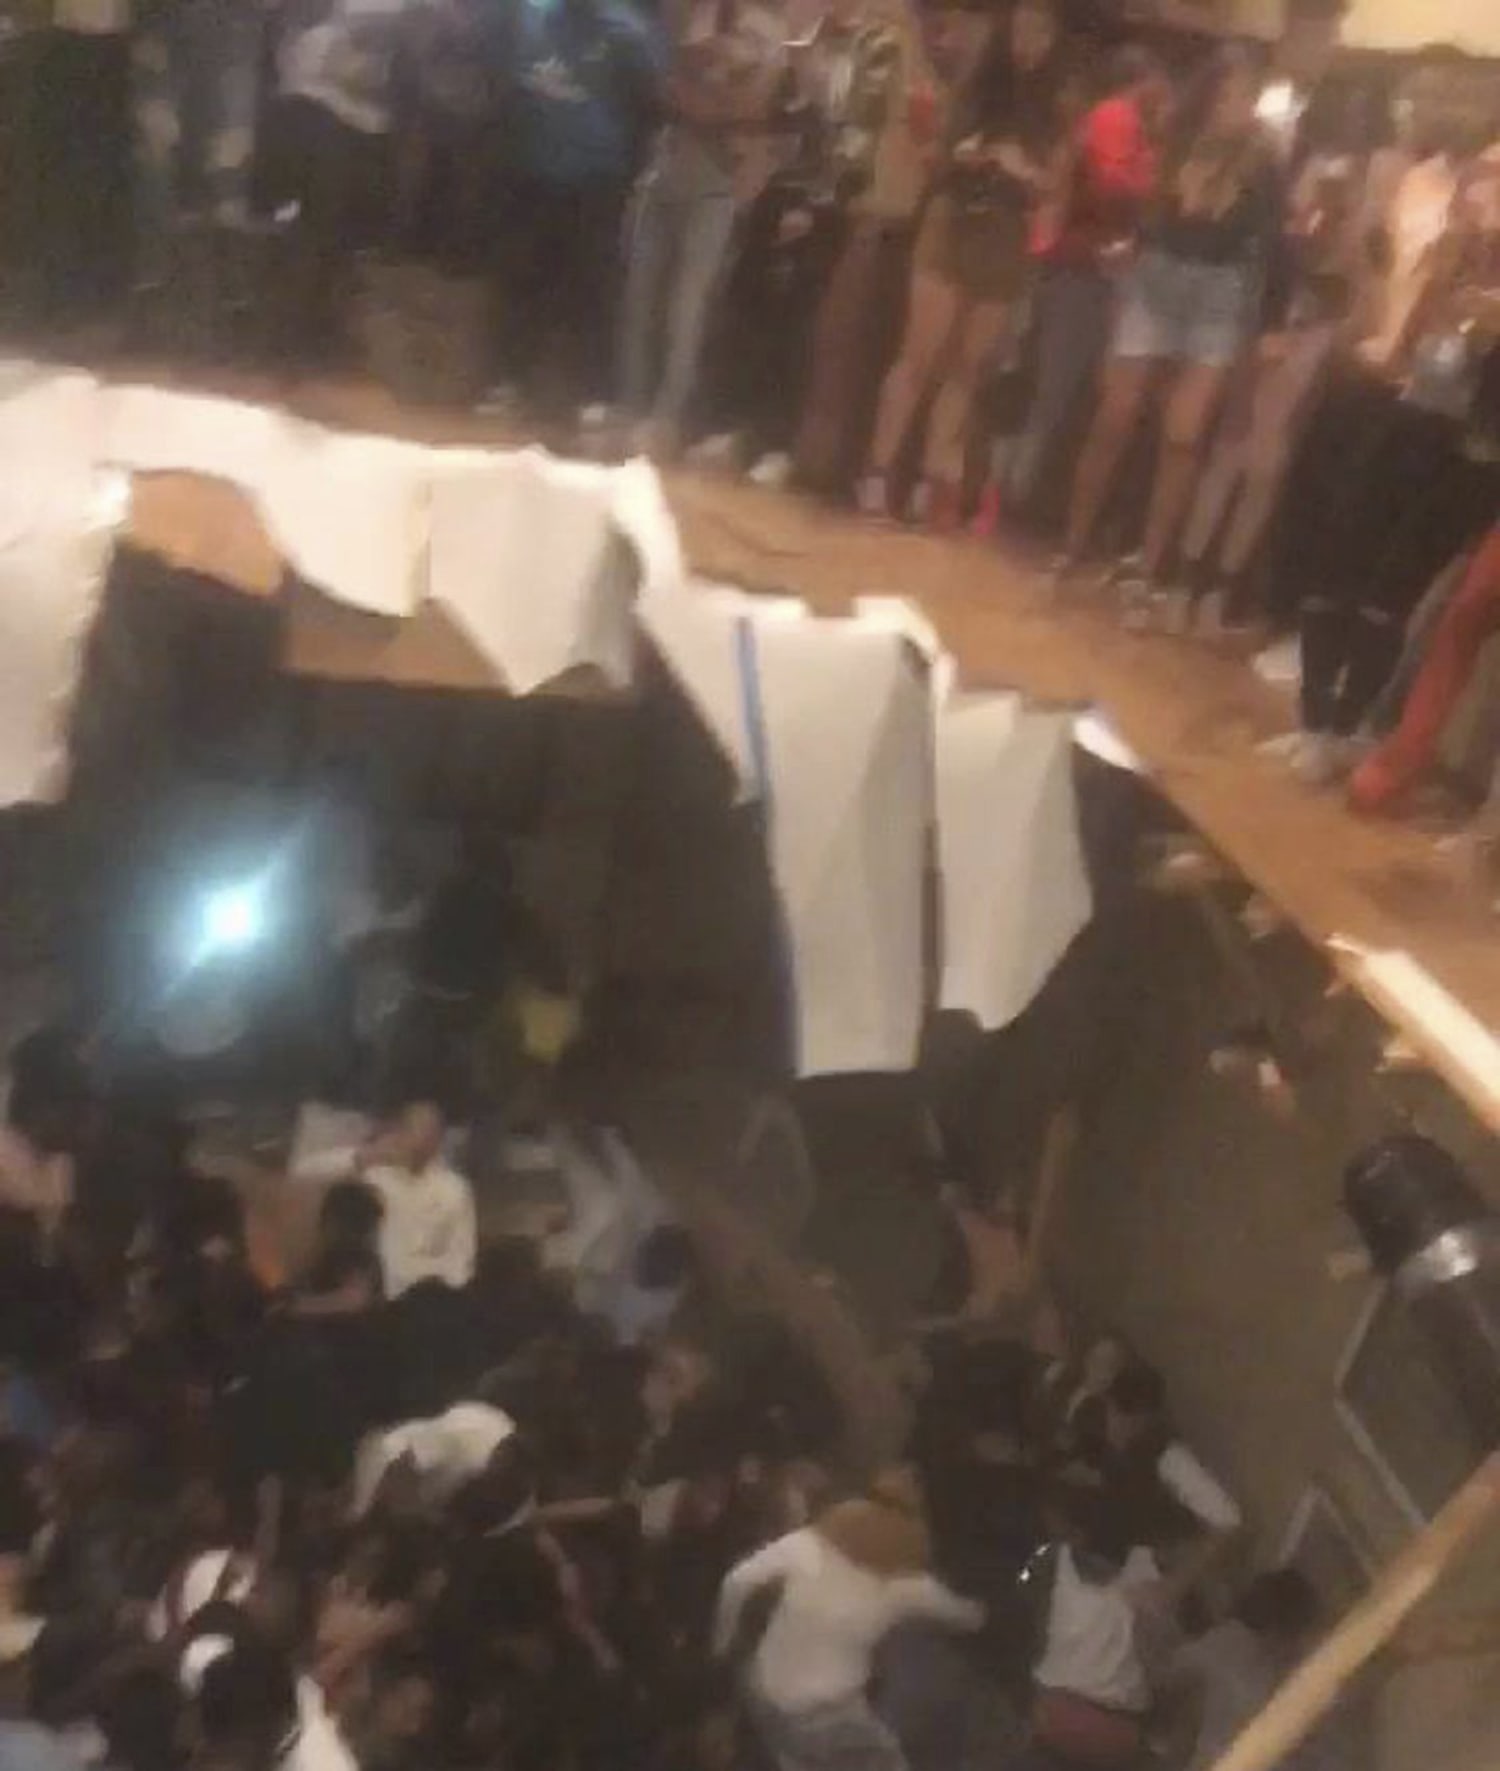 Dance Floor Collapse 